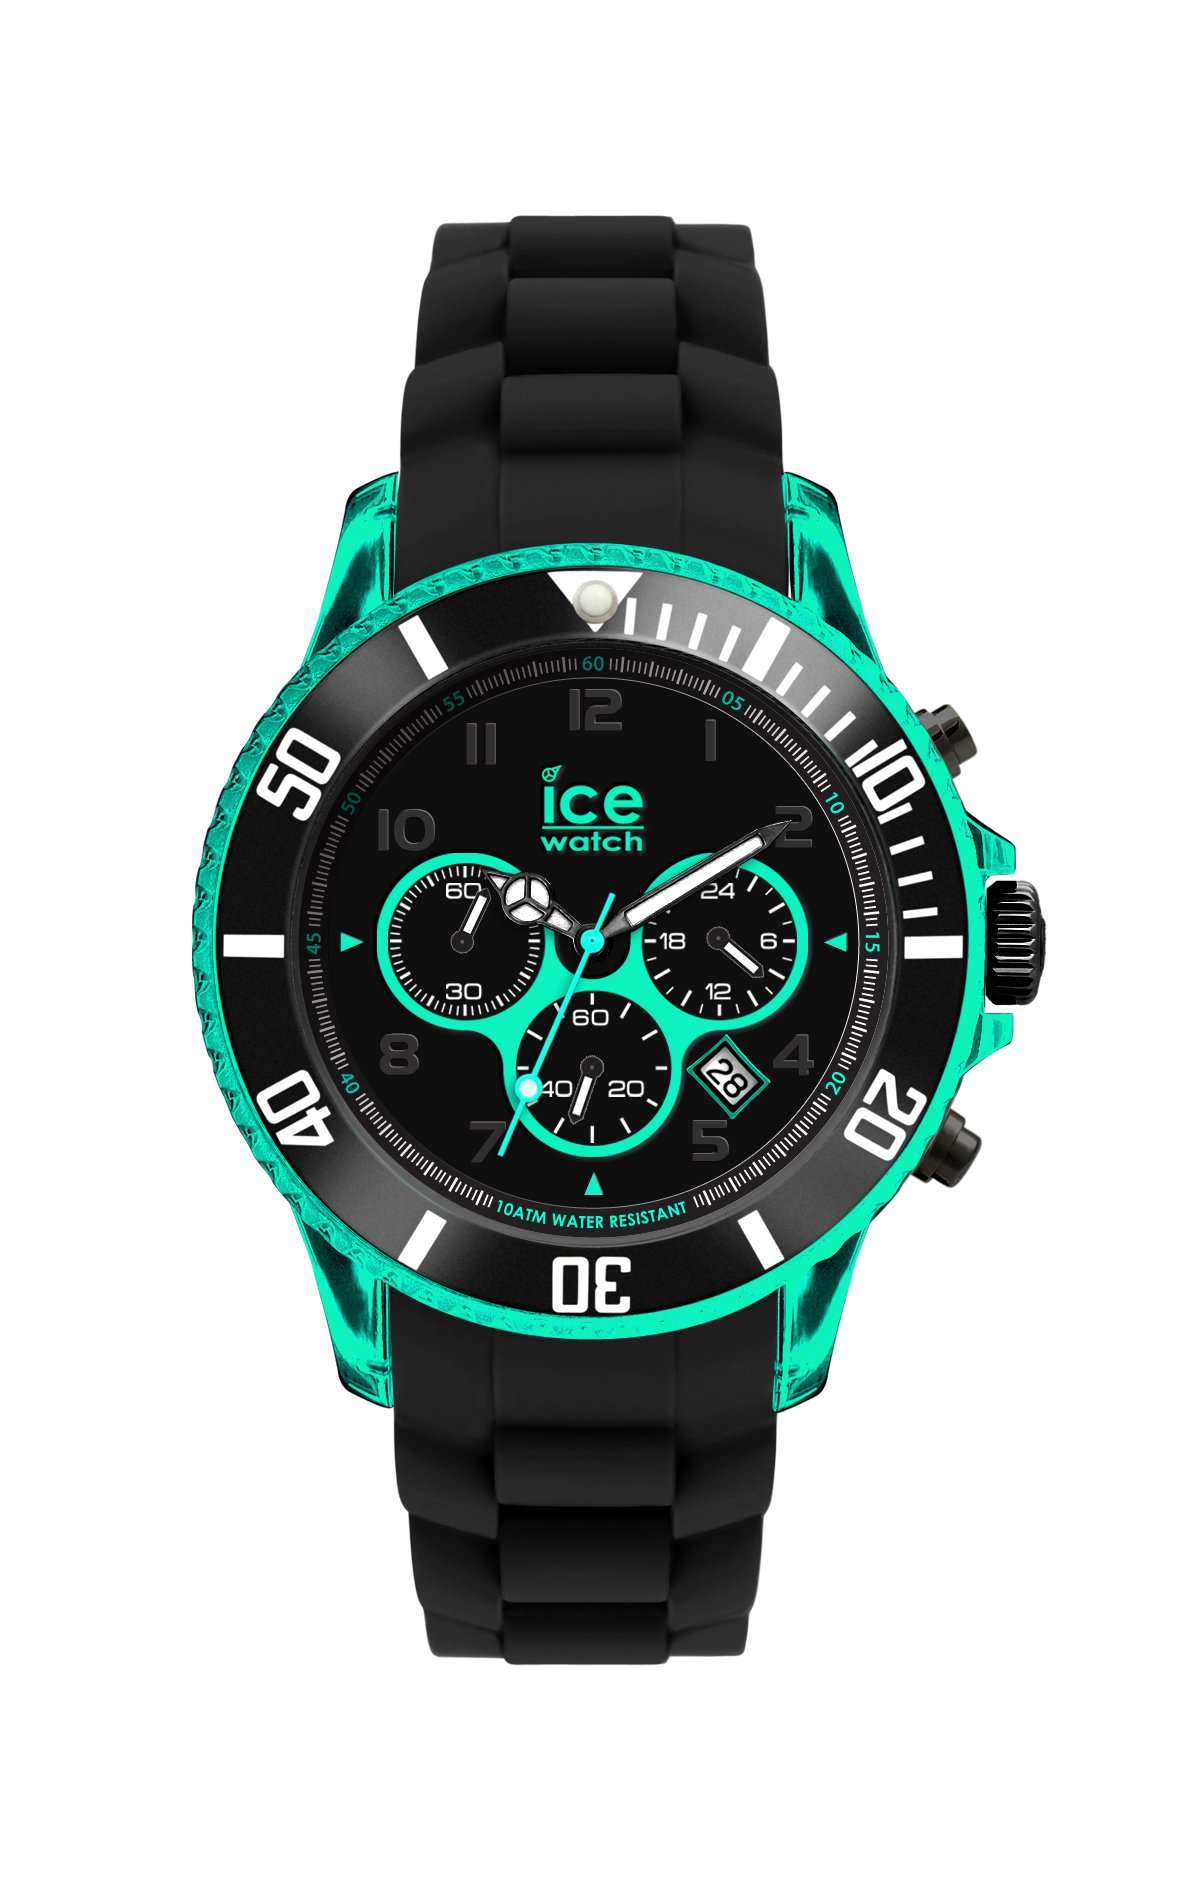 Ice watch часы. Часы айс вотч. Часы айсце айс вотч 10 ATM. Зеленые часы Ice. Часы Ice watch мужские.